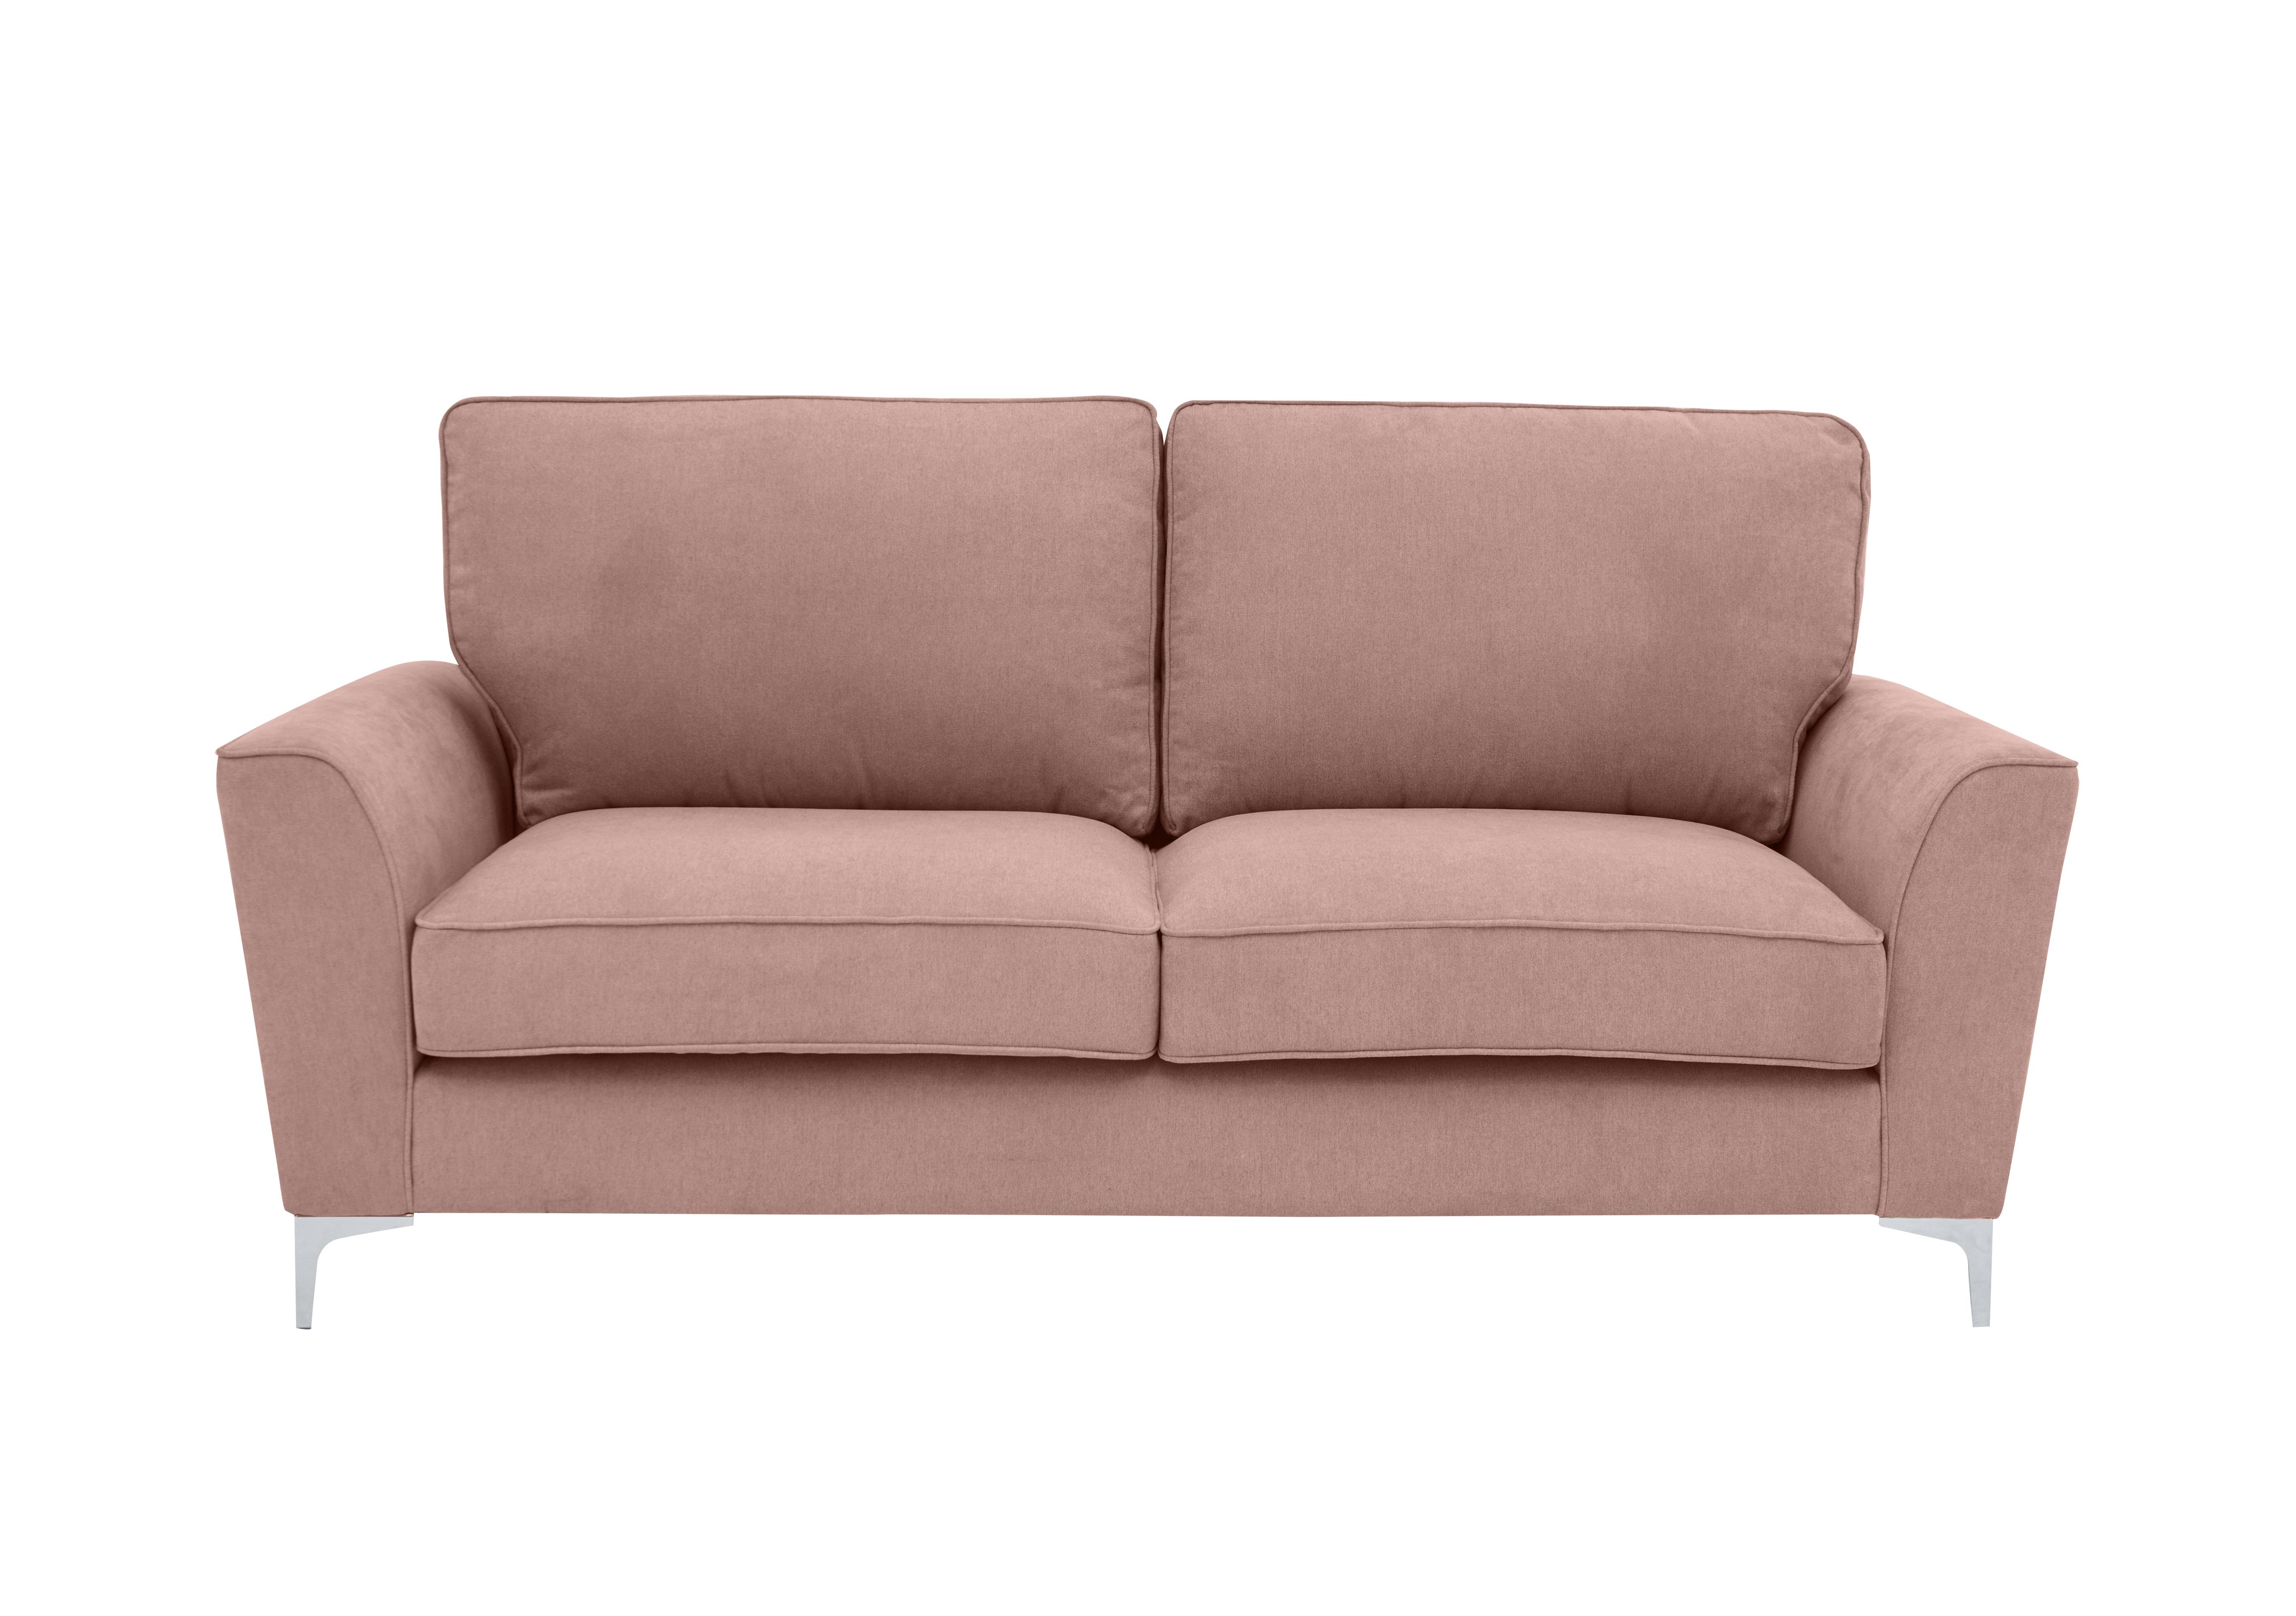 Legend 3 Seater Classic Back Fabric Sofa in Kingston Blush on Furniture Village